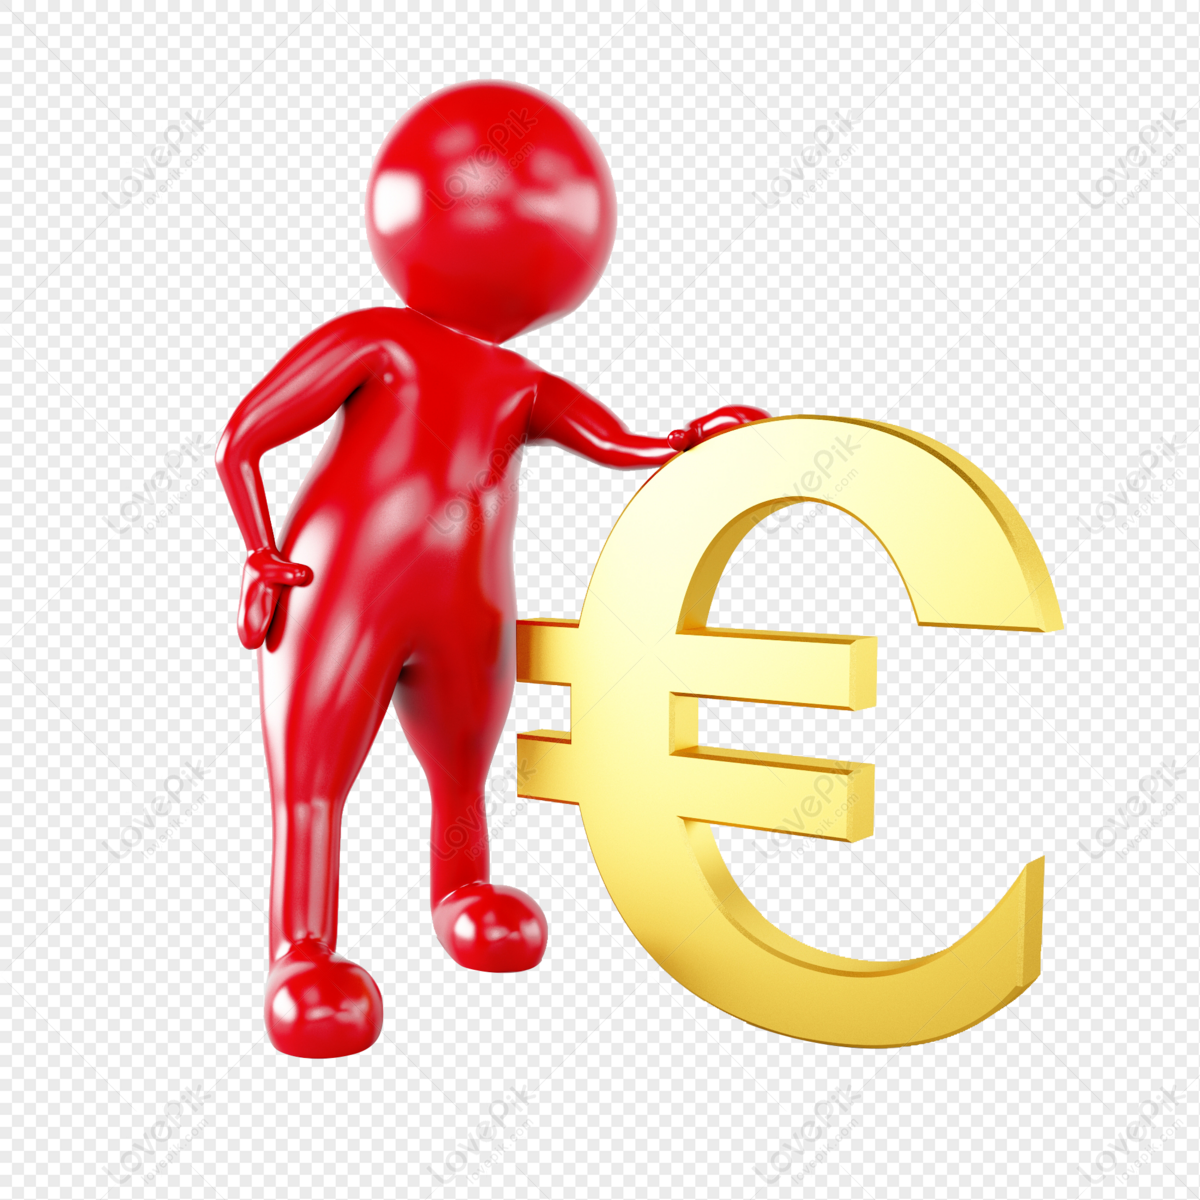 Euro Sign png download - 1440*969 - Free Transparent Euro